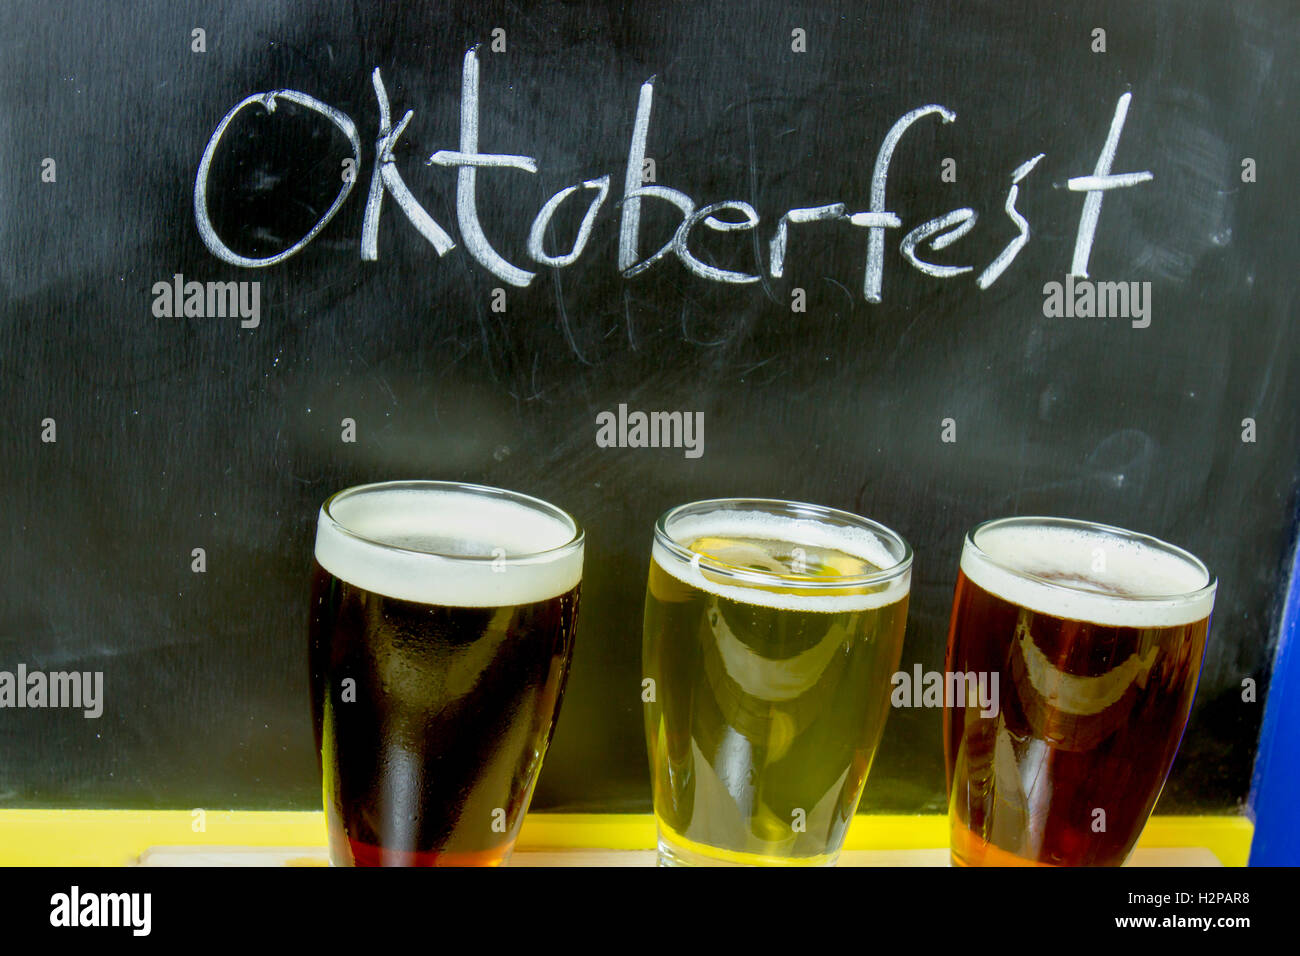 Flight of assorted Oktoberfest beers with chalkboard. Stock Photo